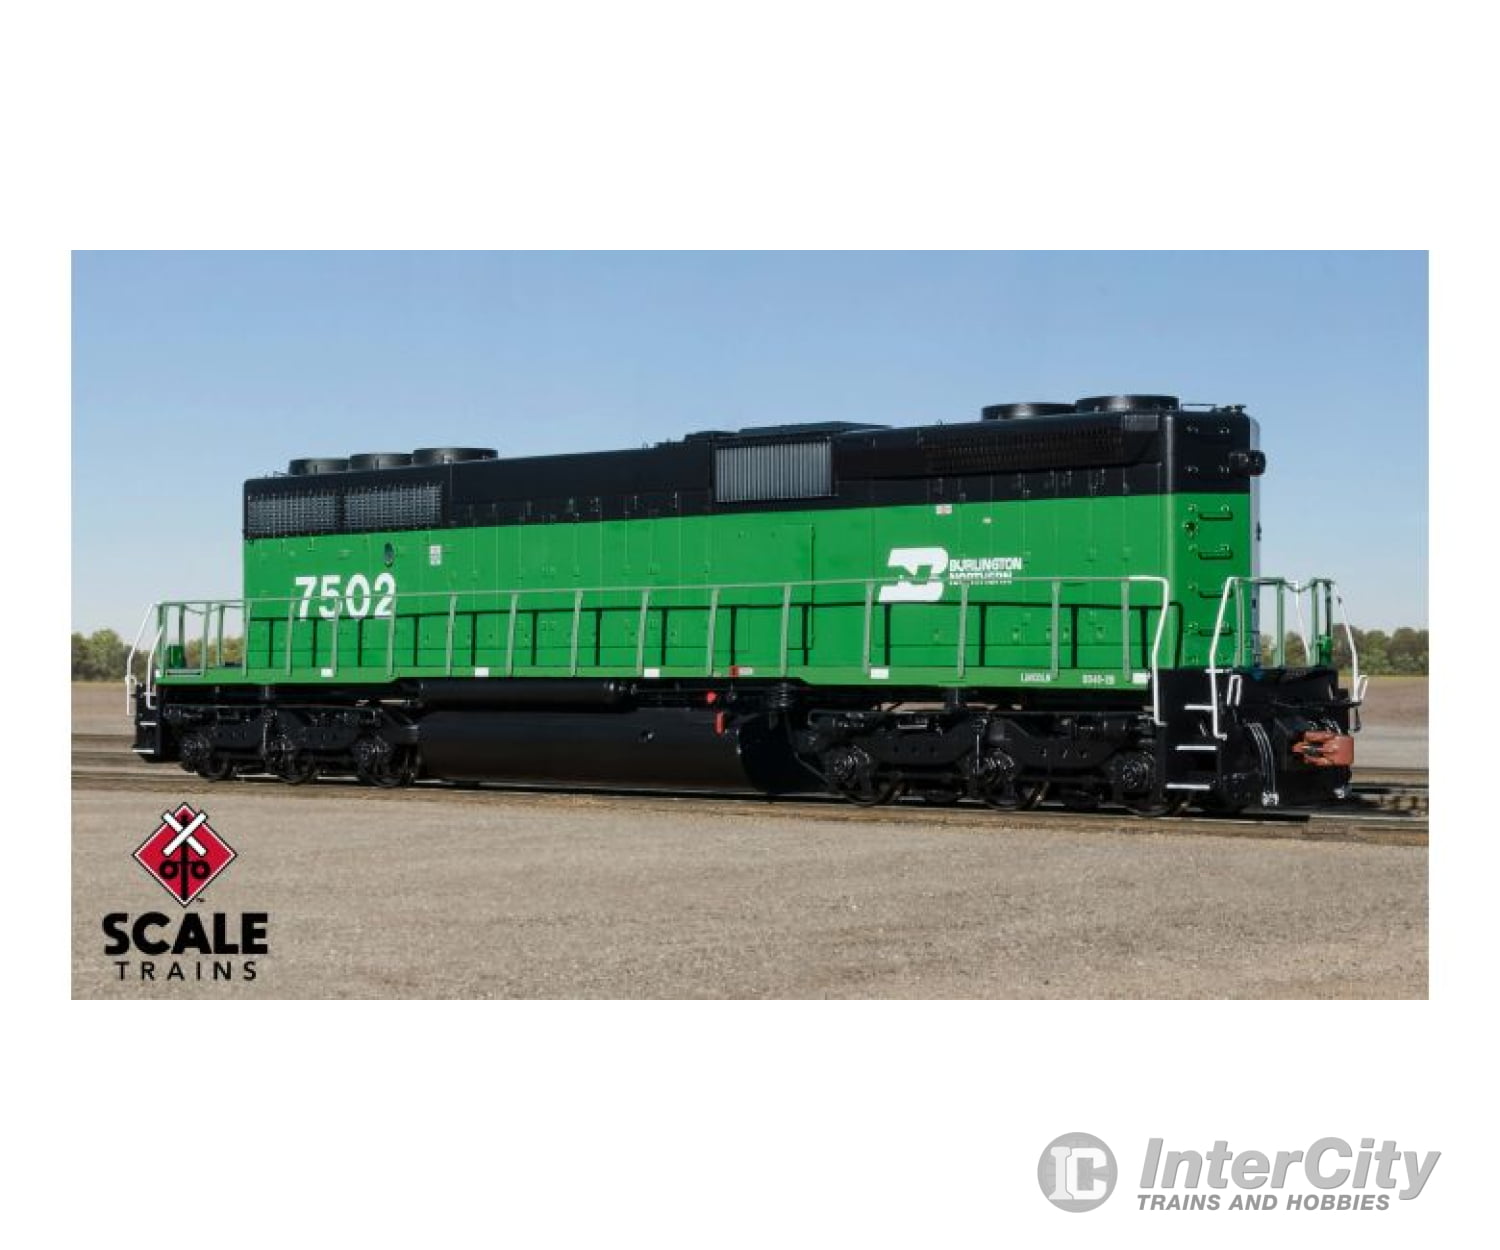 Scale Trains Sxt38789 Rivet Counter Ho Emd Sd40-2B Burlington Northern/As Rebuilt #7502 Locomotives